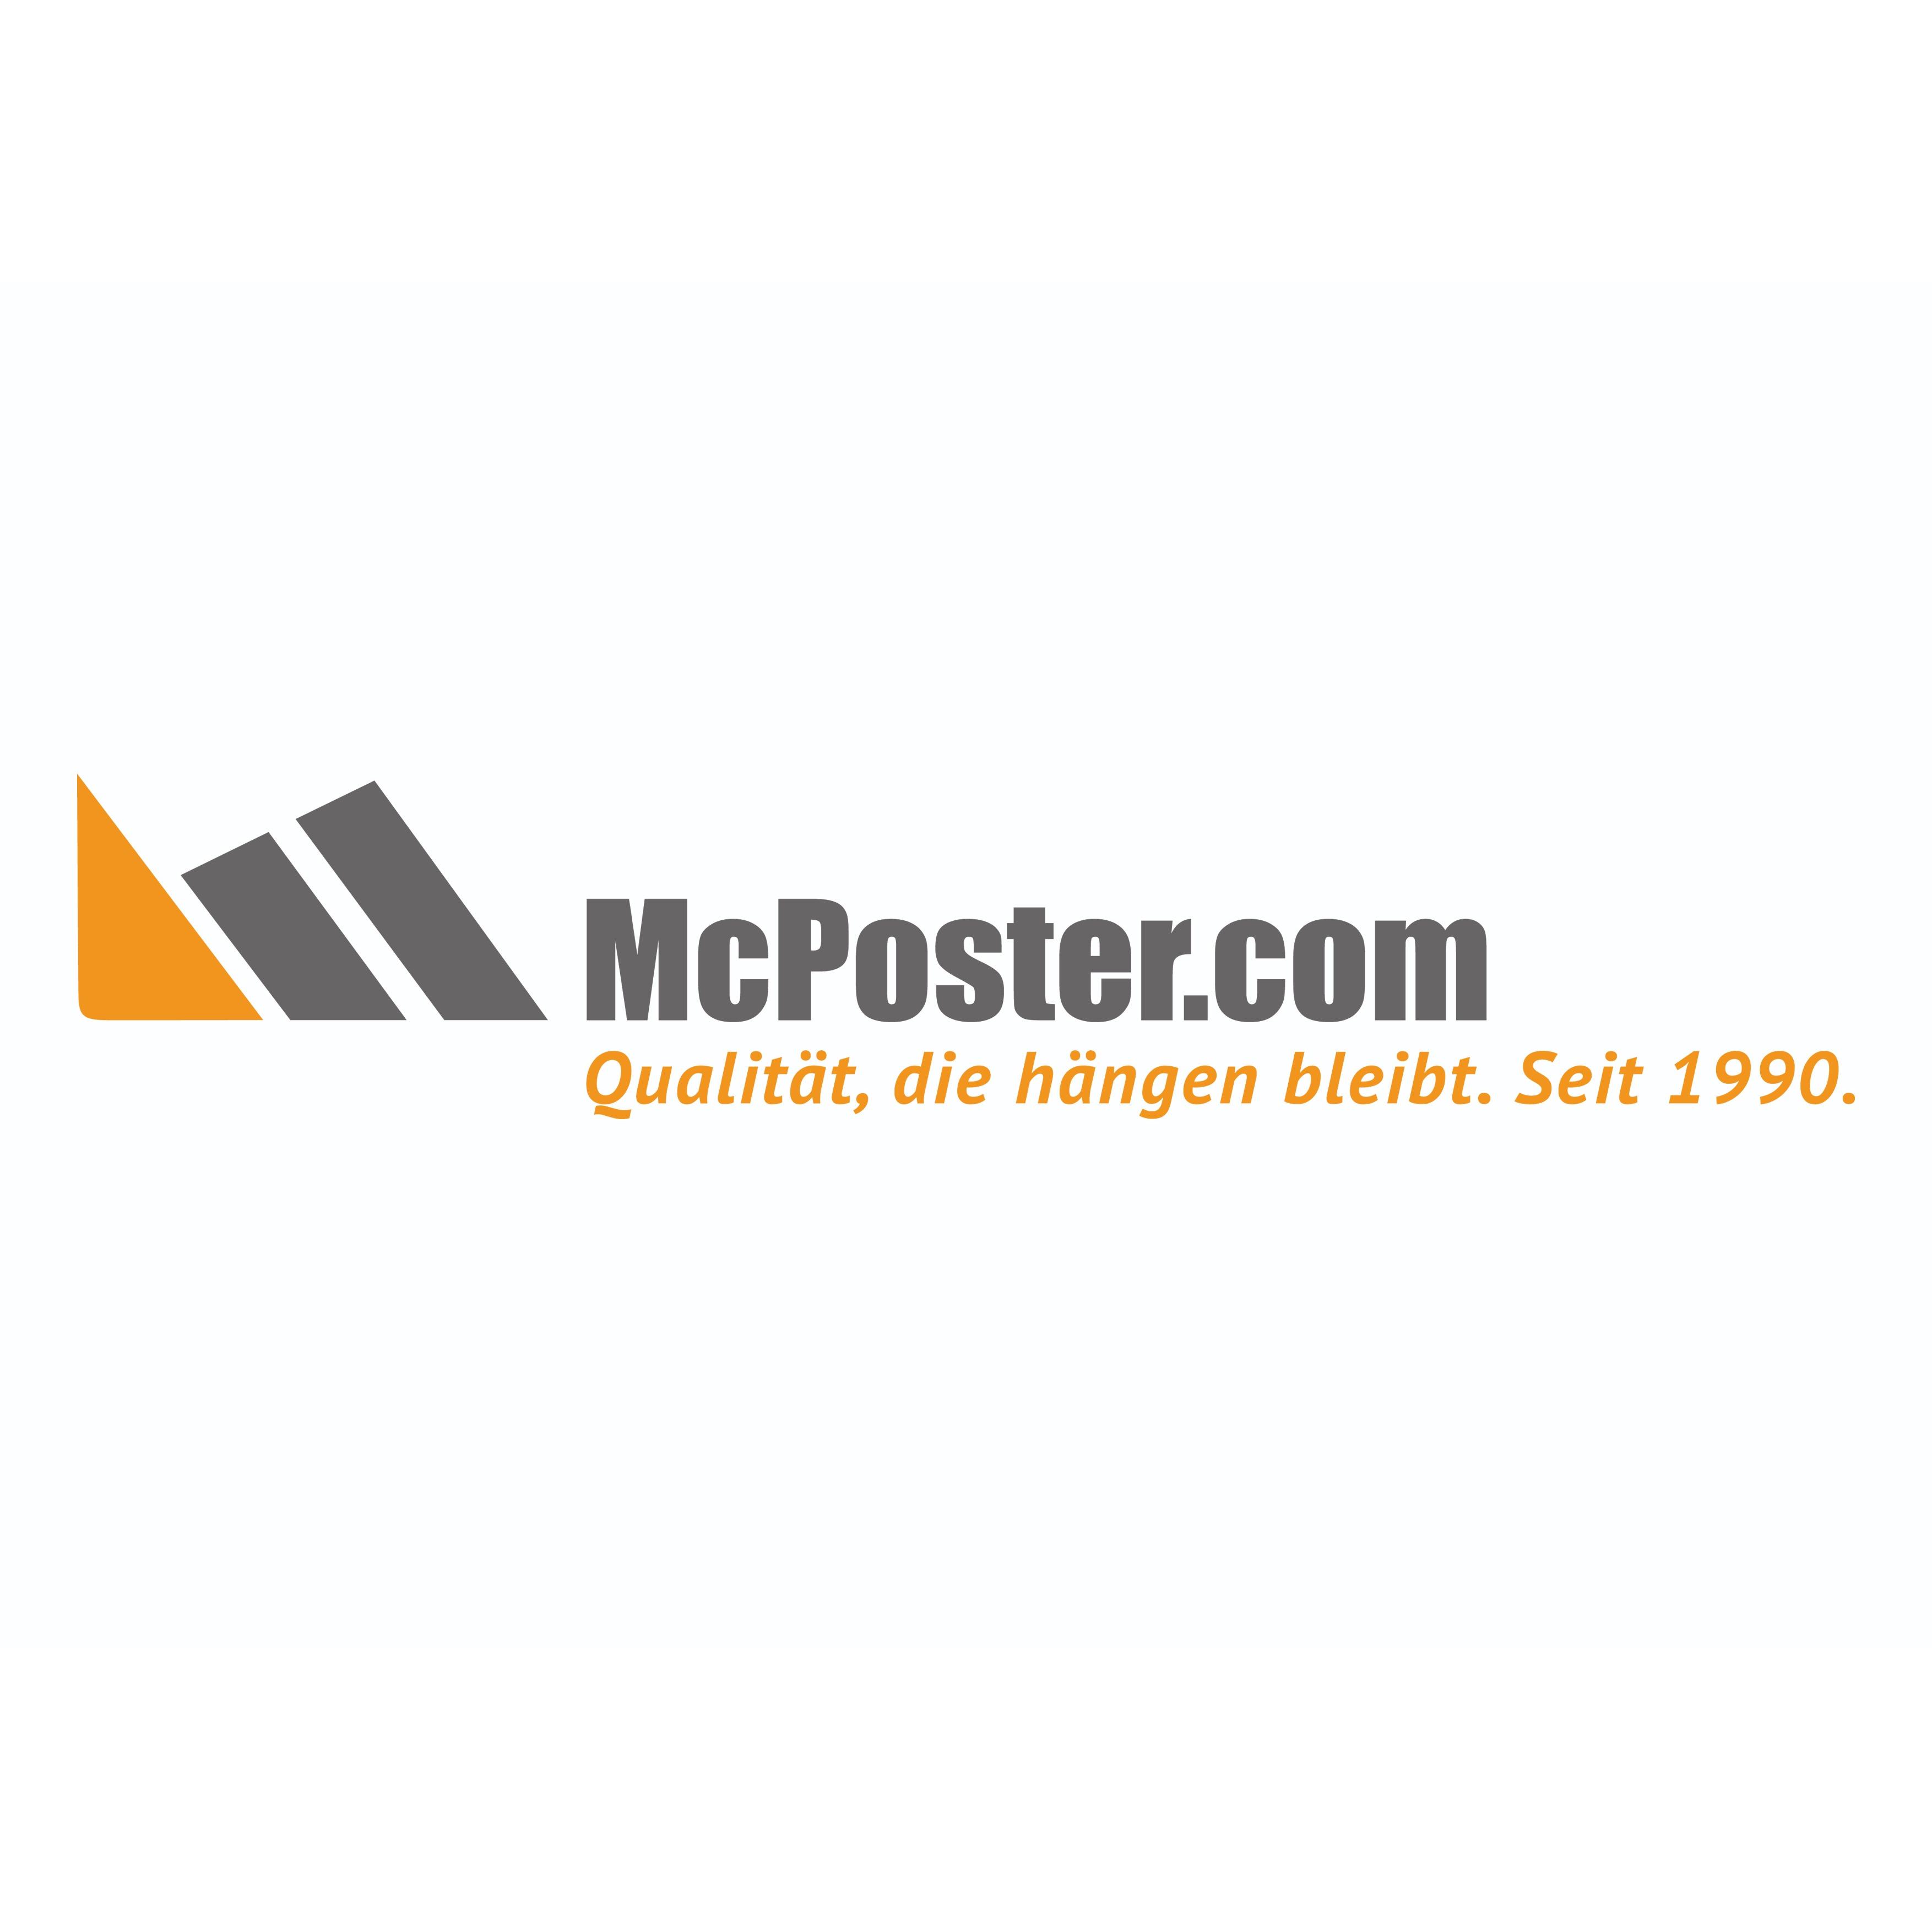 McPoster Media Solutions GmbH in Berlin - Logo